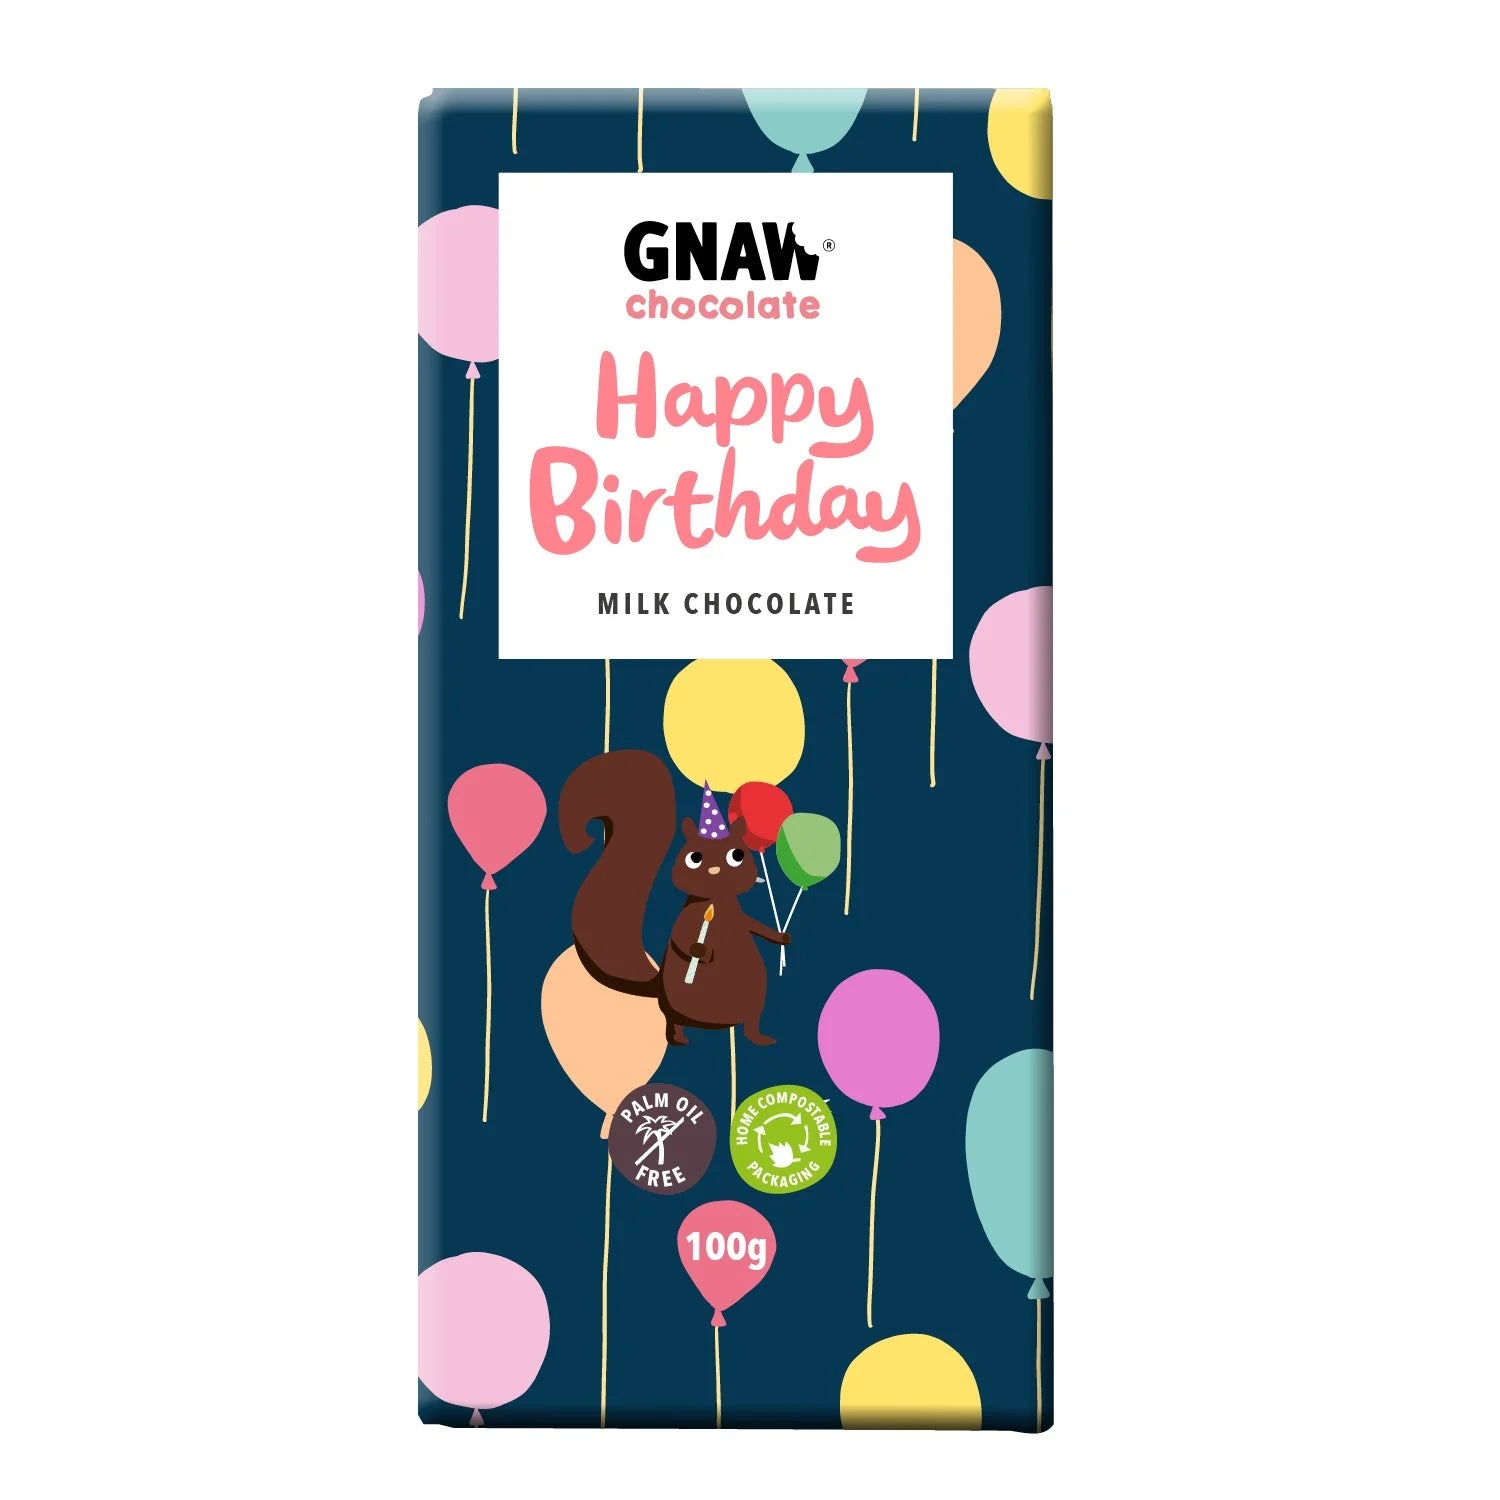 Gnaw Happy Birthday Milk Chocolate Bar